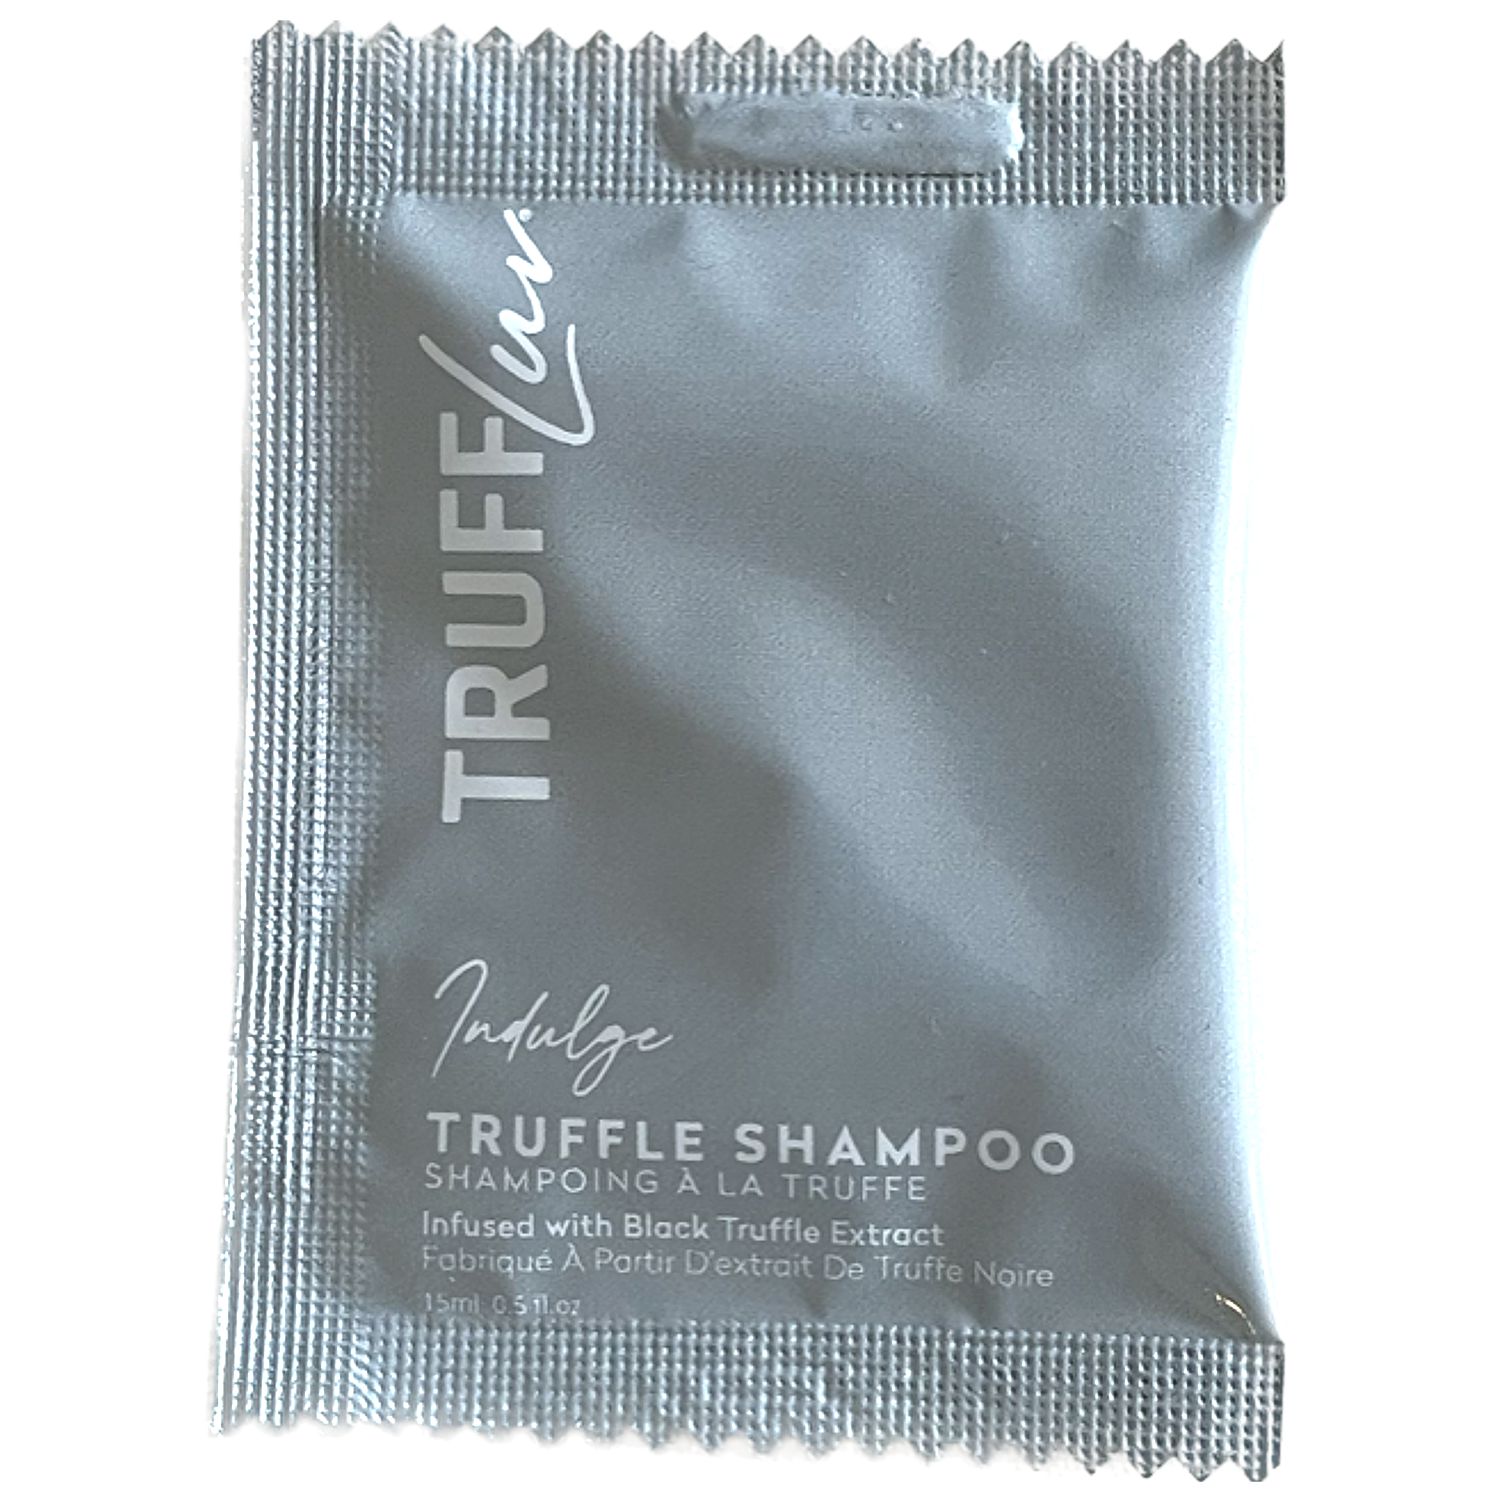 TruffLuv INDULGE Truffle Shampoo 15 ml Sachet